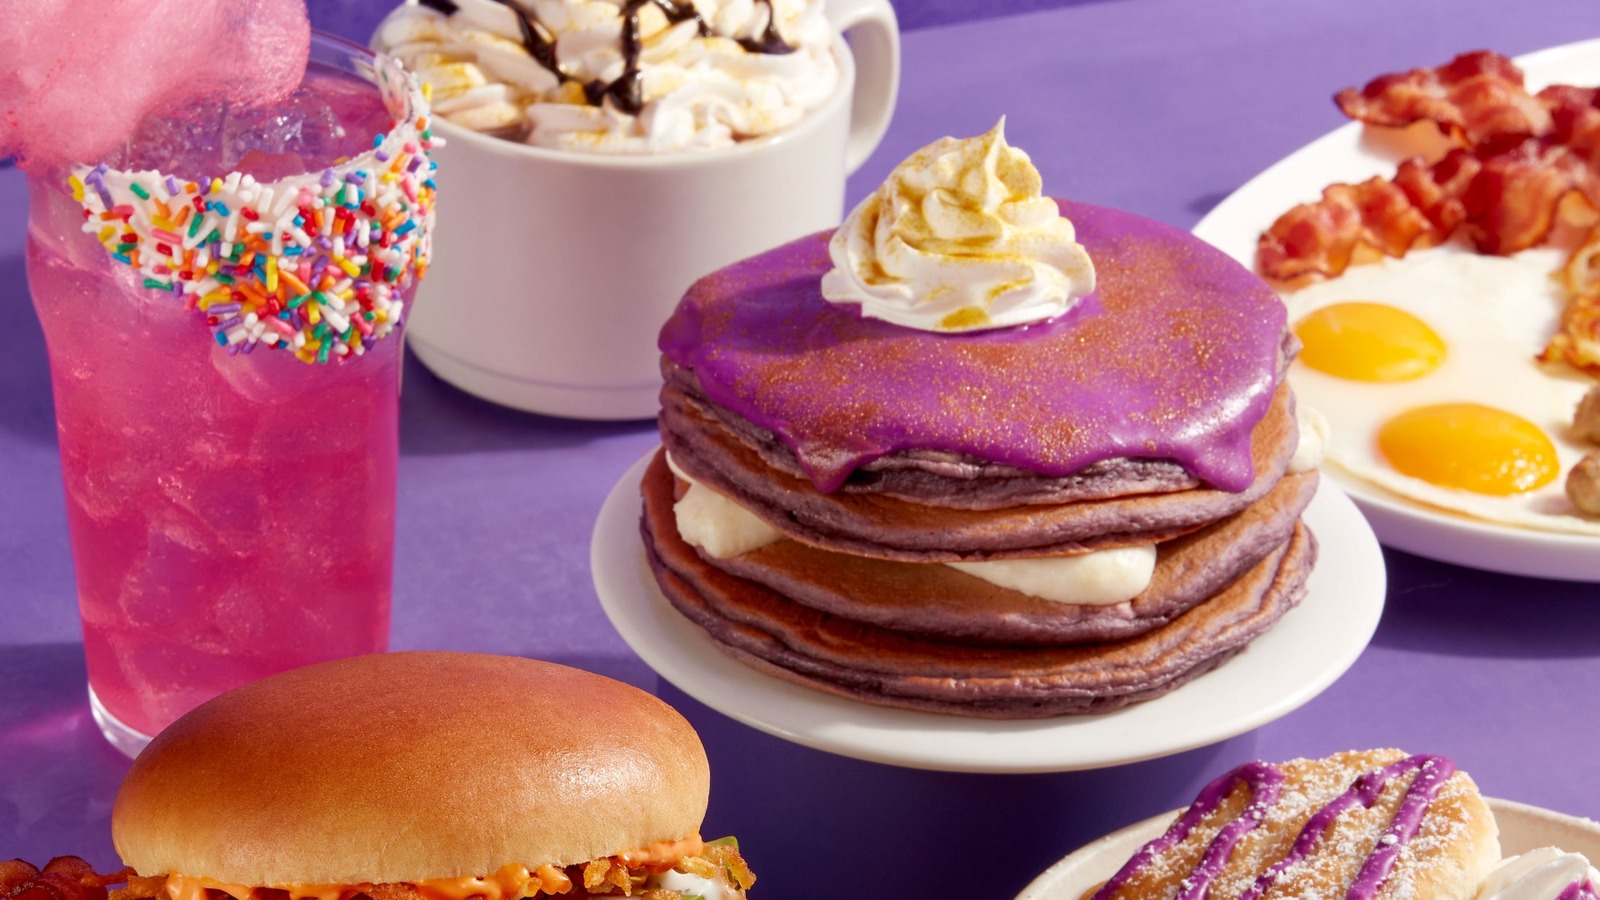 Whimsical' menu at IHOP features 'Wonka' inspired purple pancakes 